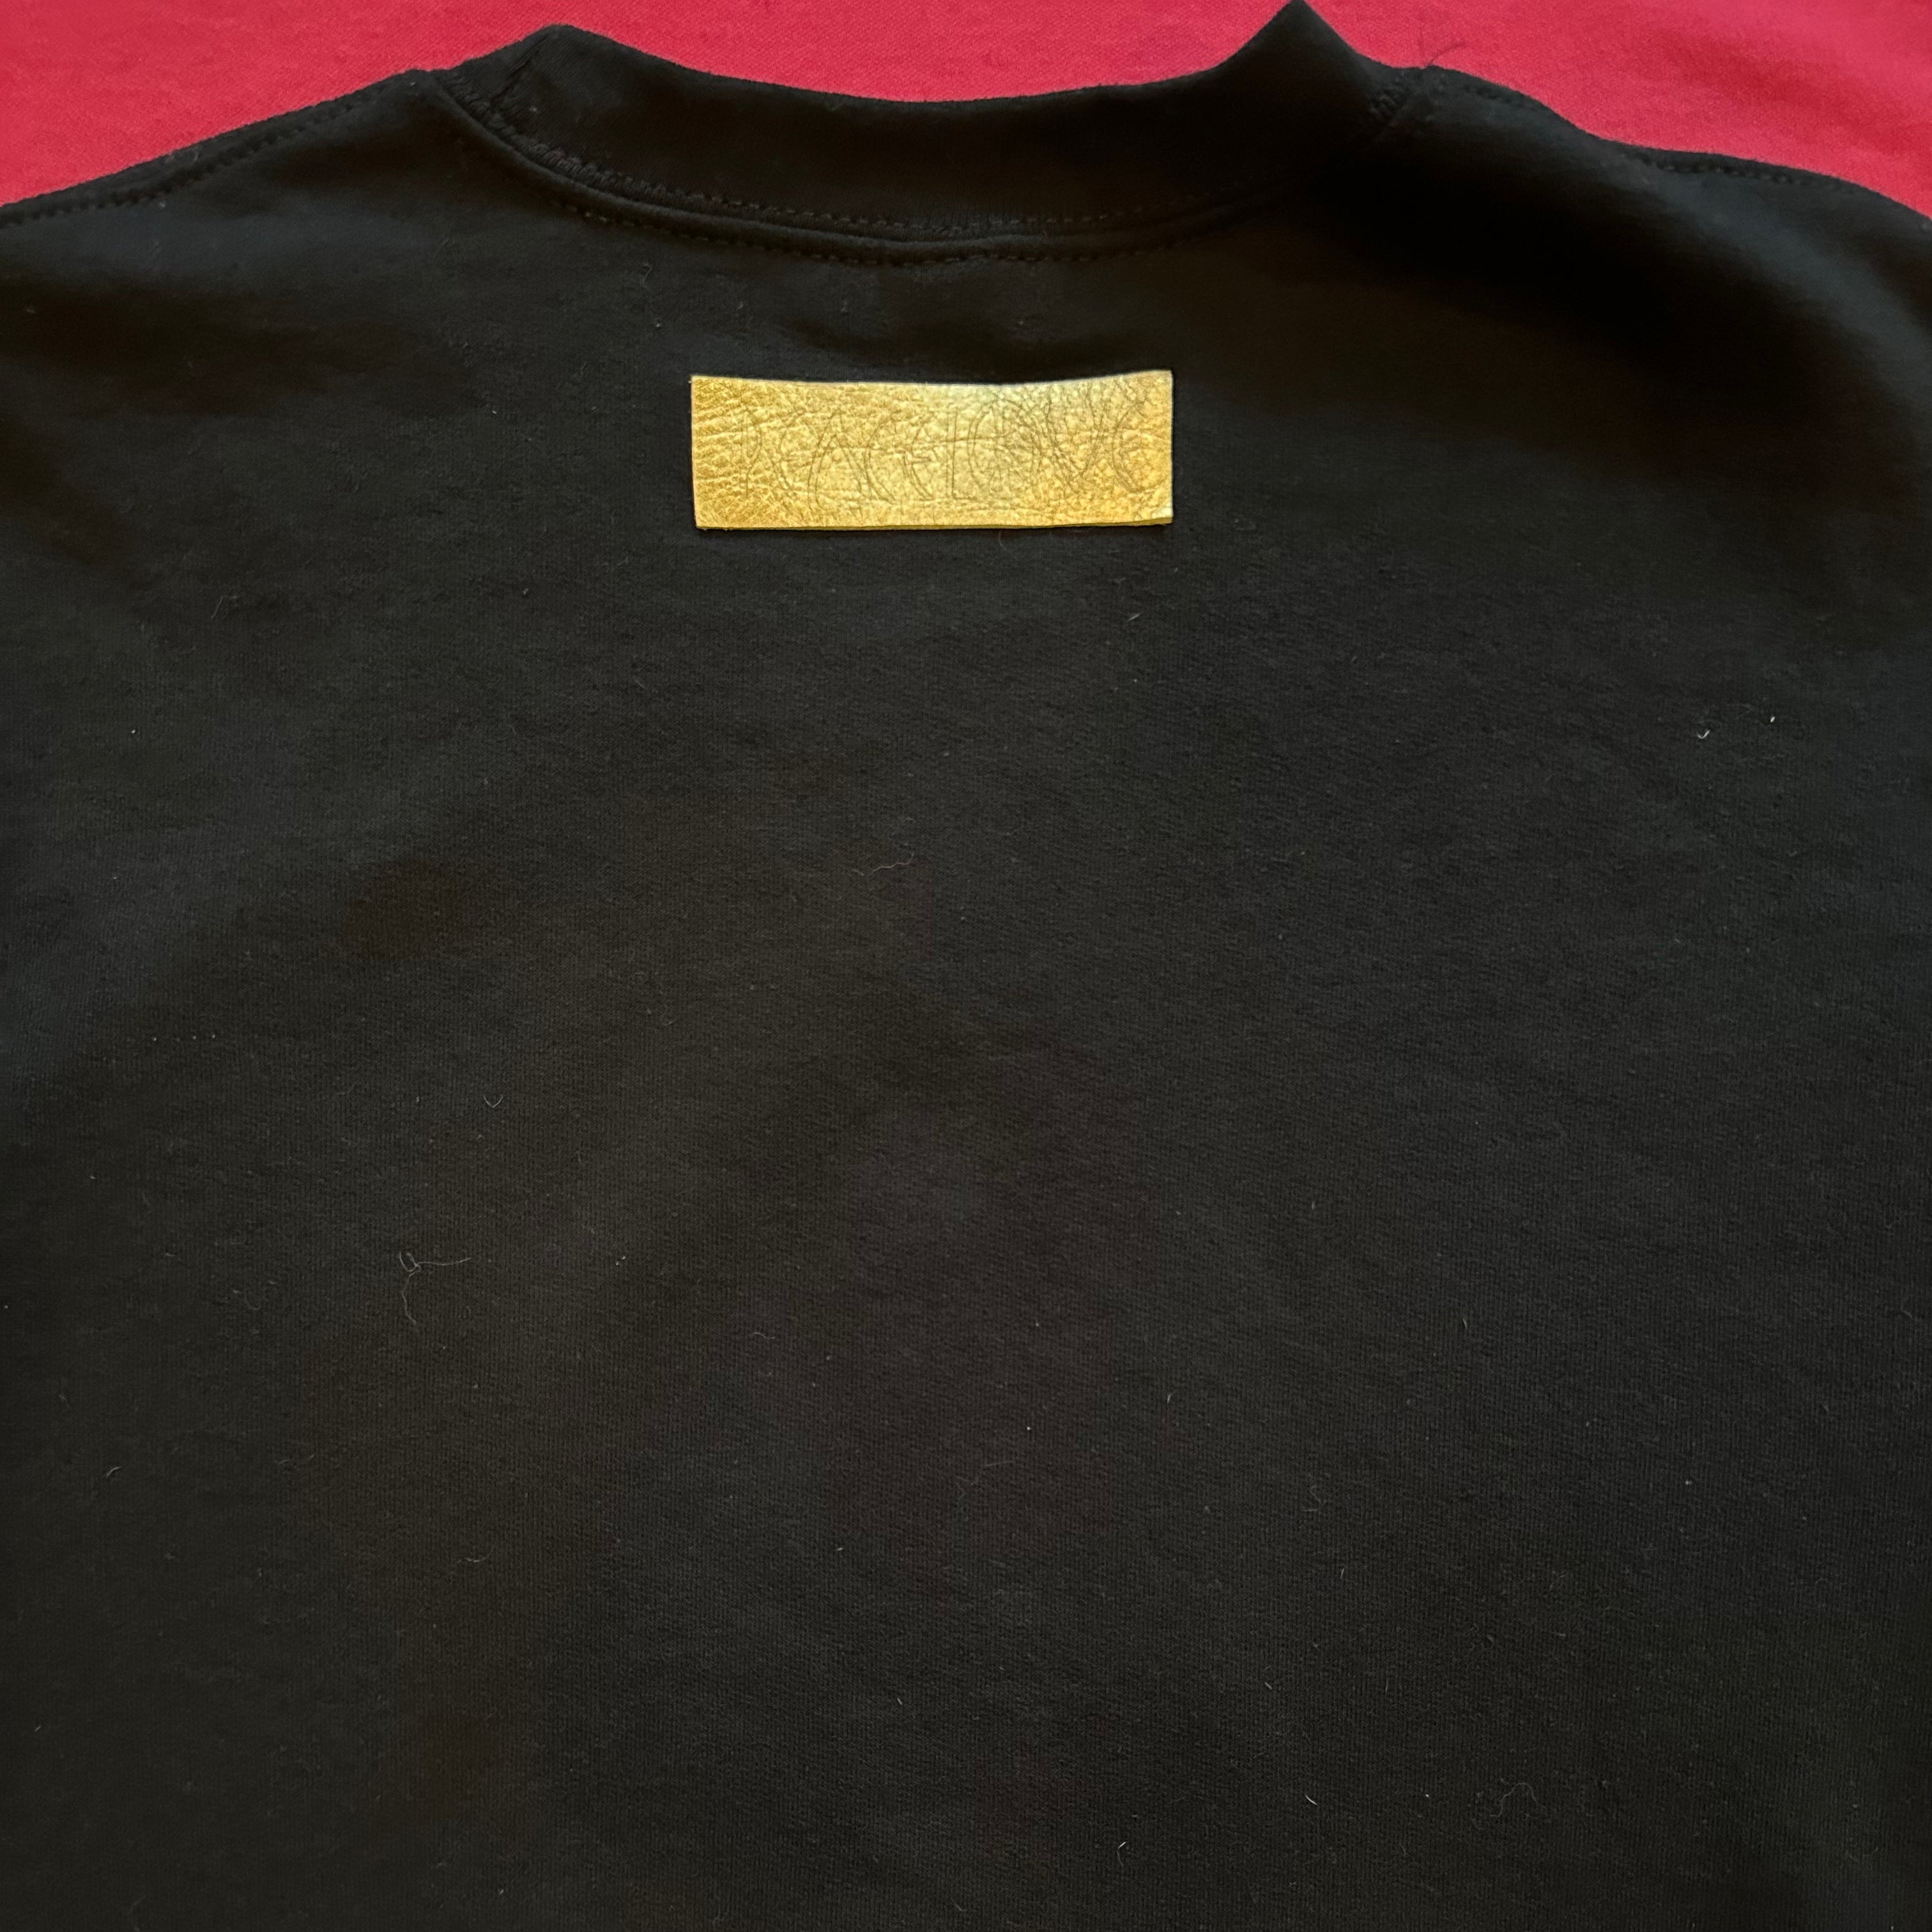 Custom Gold Leather LoveAbove Sweatshirt - Limited Run